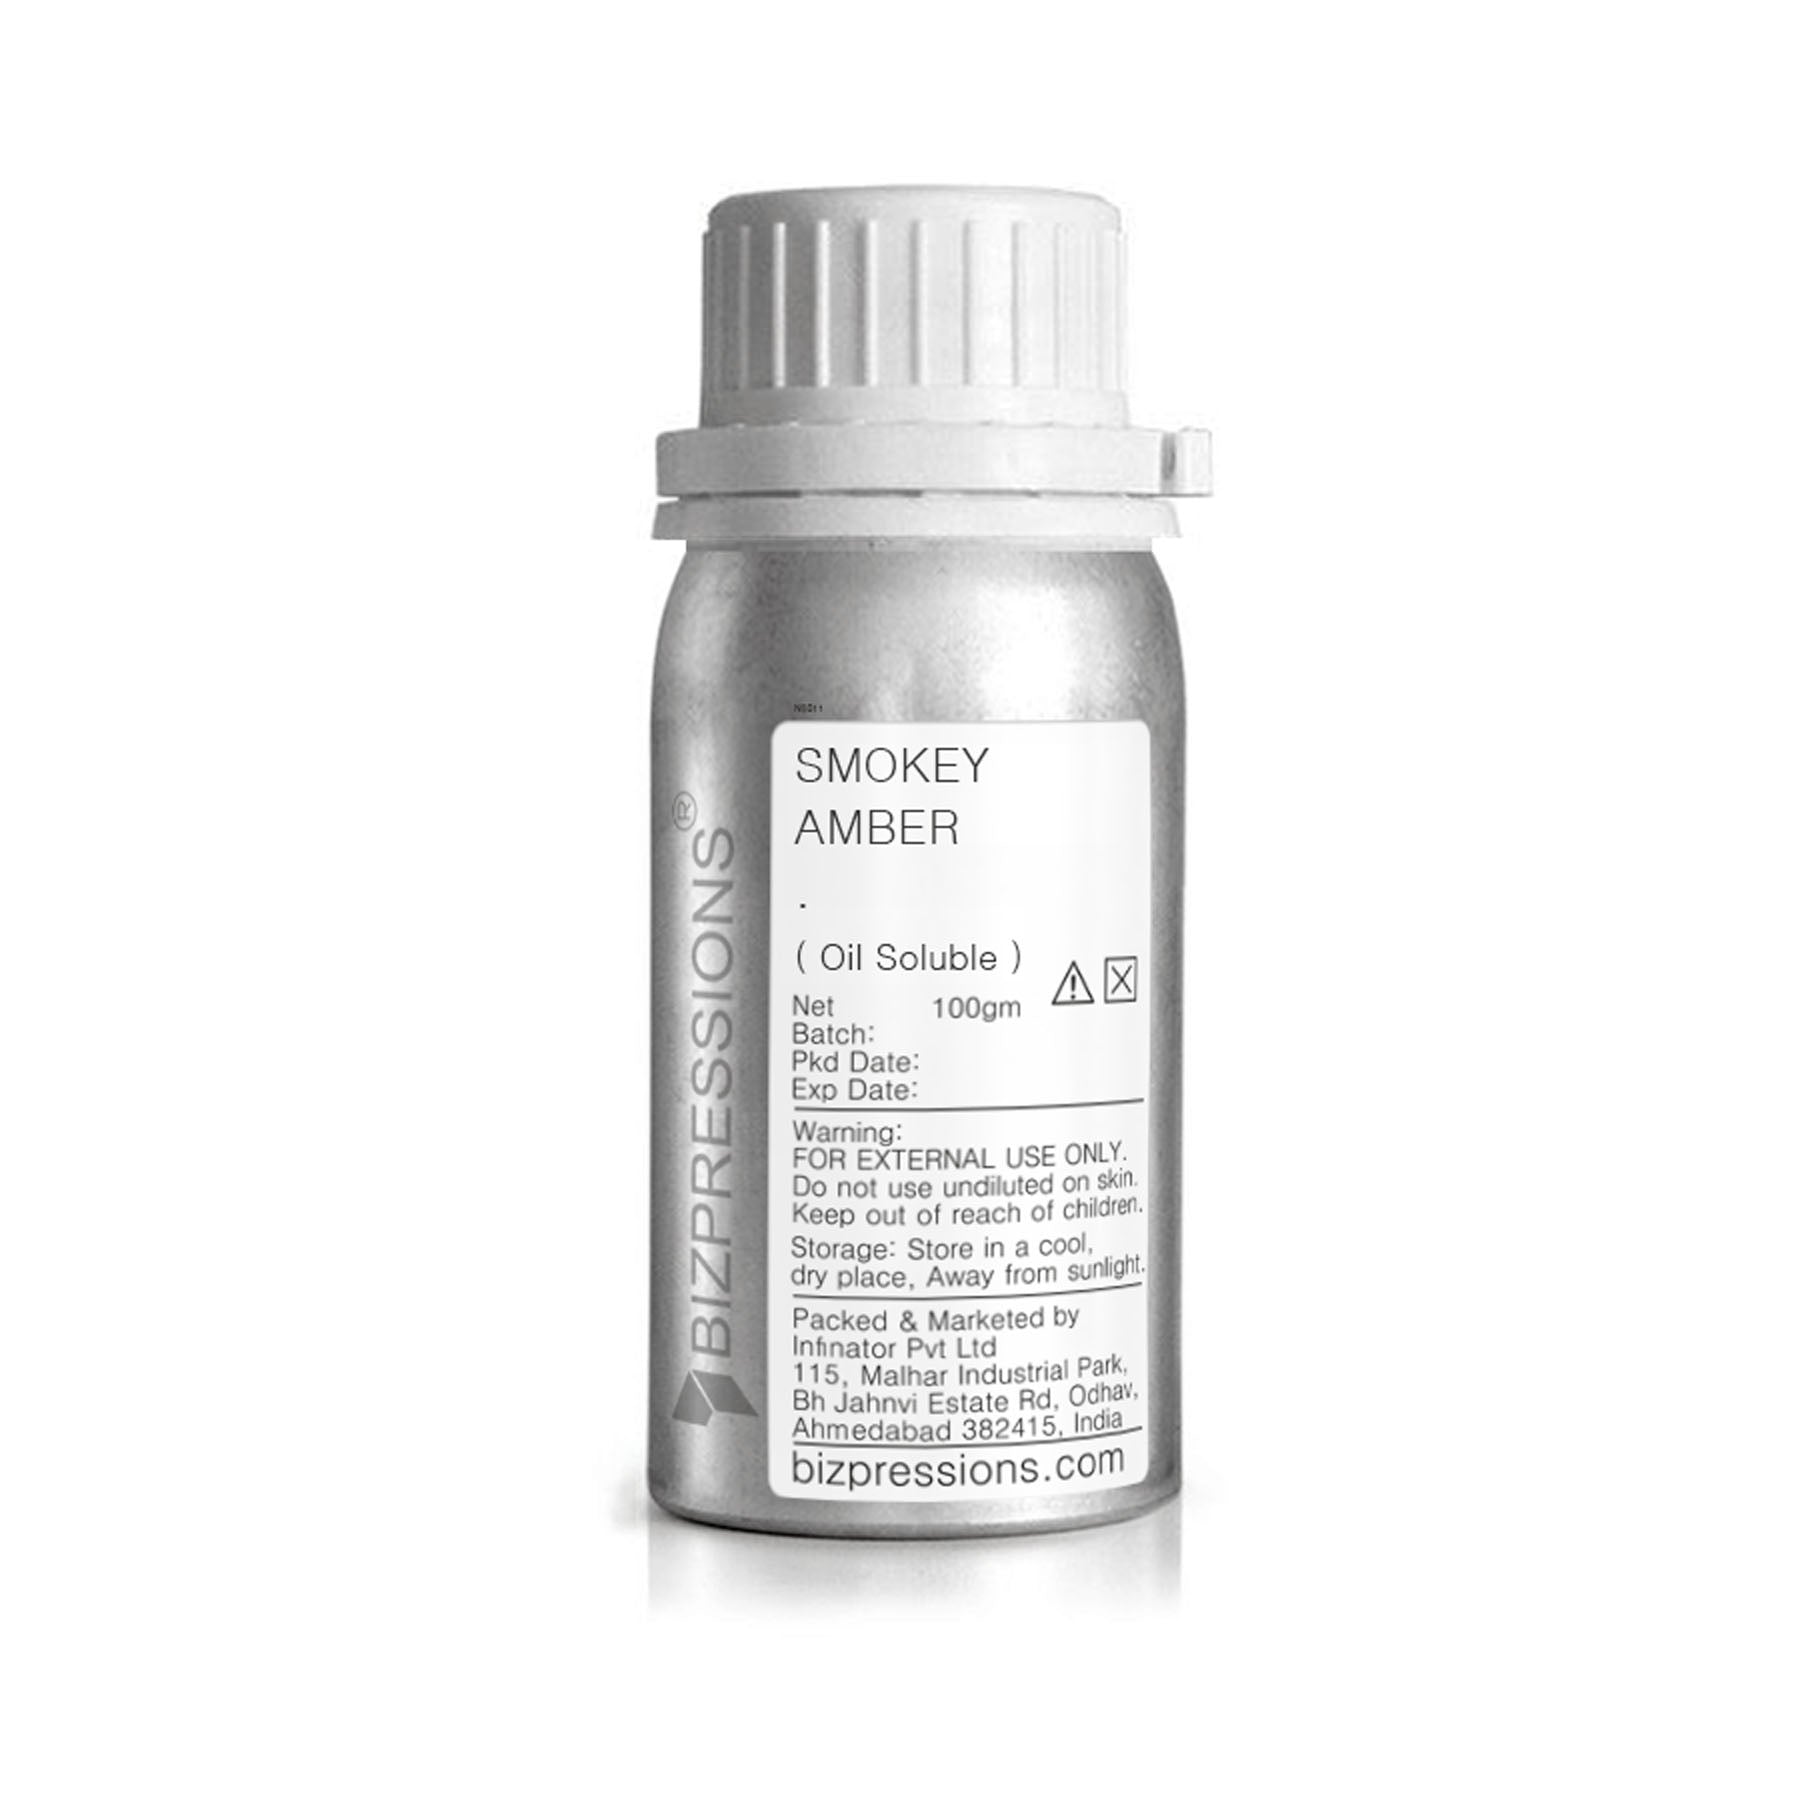 SMOKEY AMBER - Fragrance ( Oil Soluble ) - 100 gm